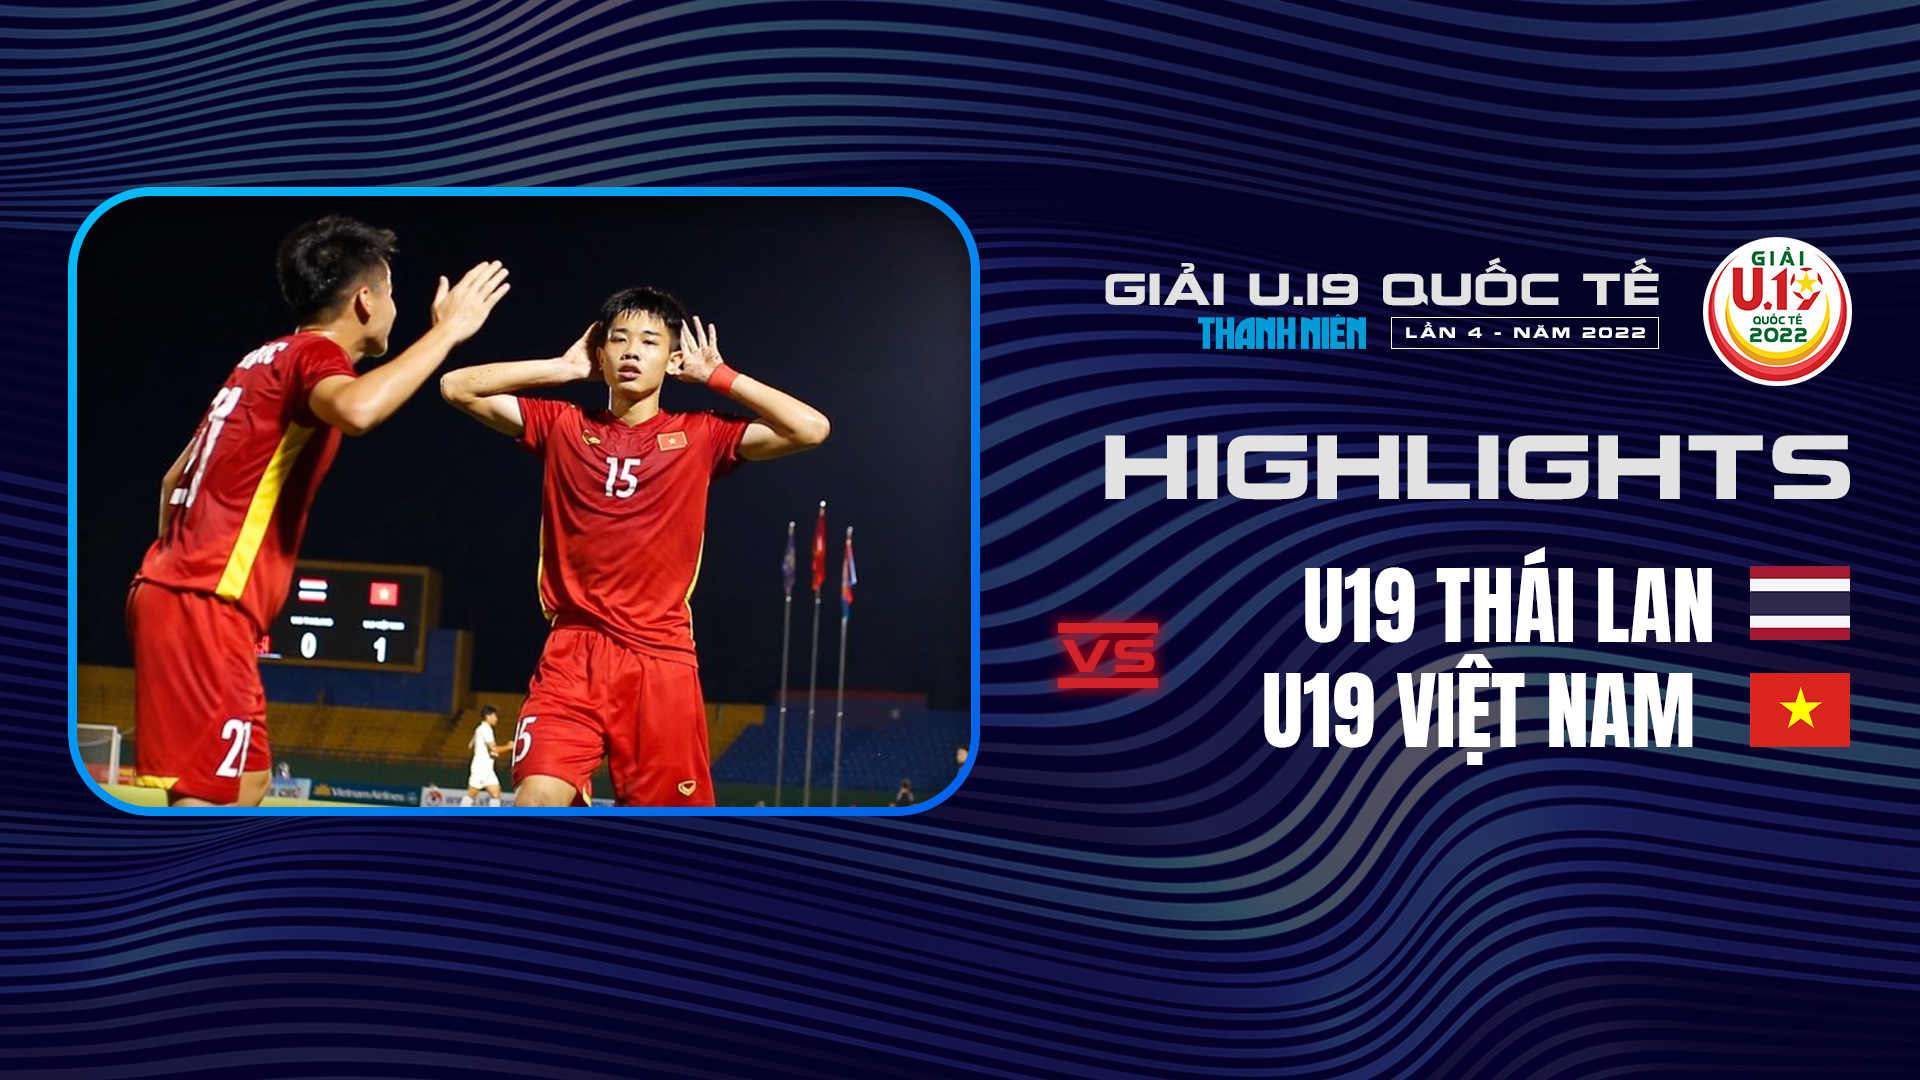 U19 Thái Lan - U19 Việt Nam Highlights - U19 Thailand - U19 Vietnam Highlights